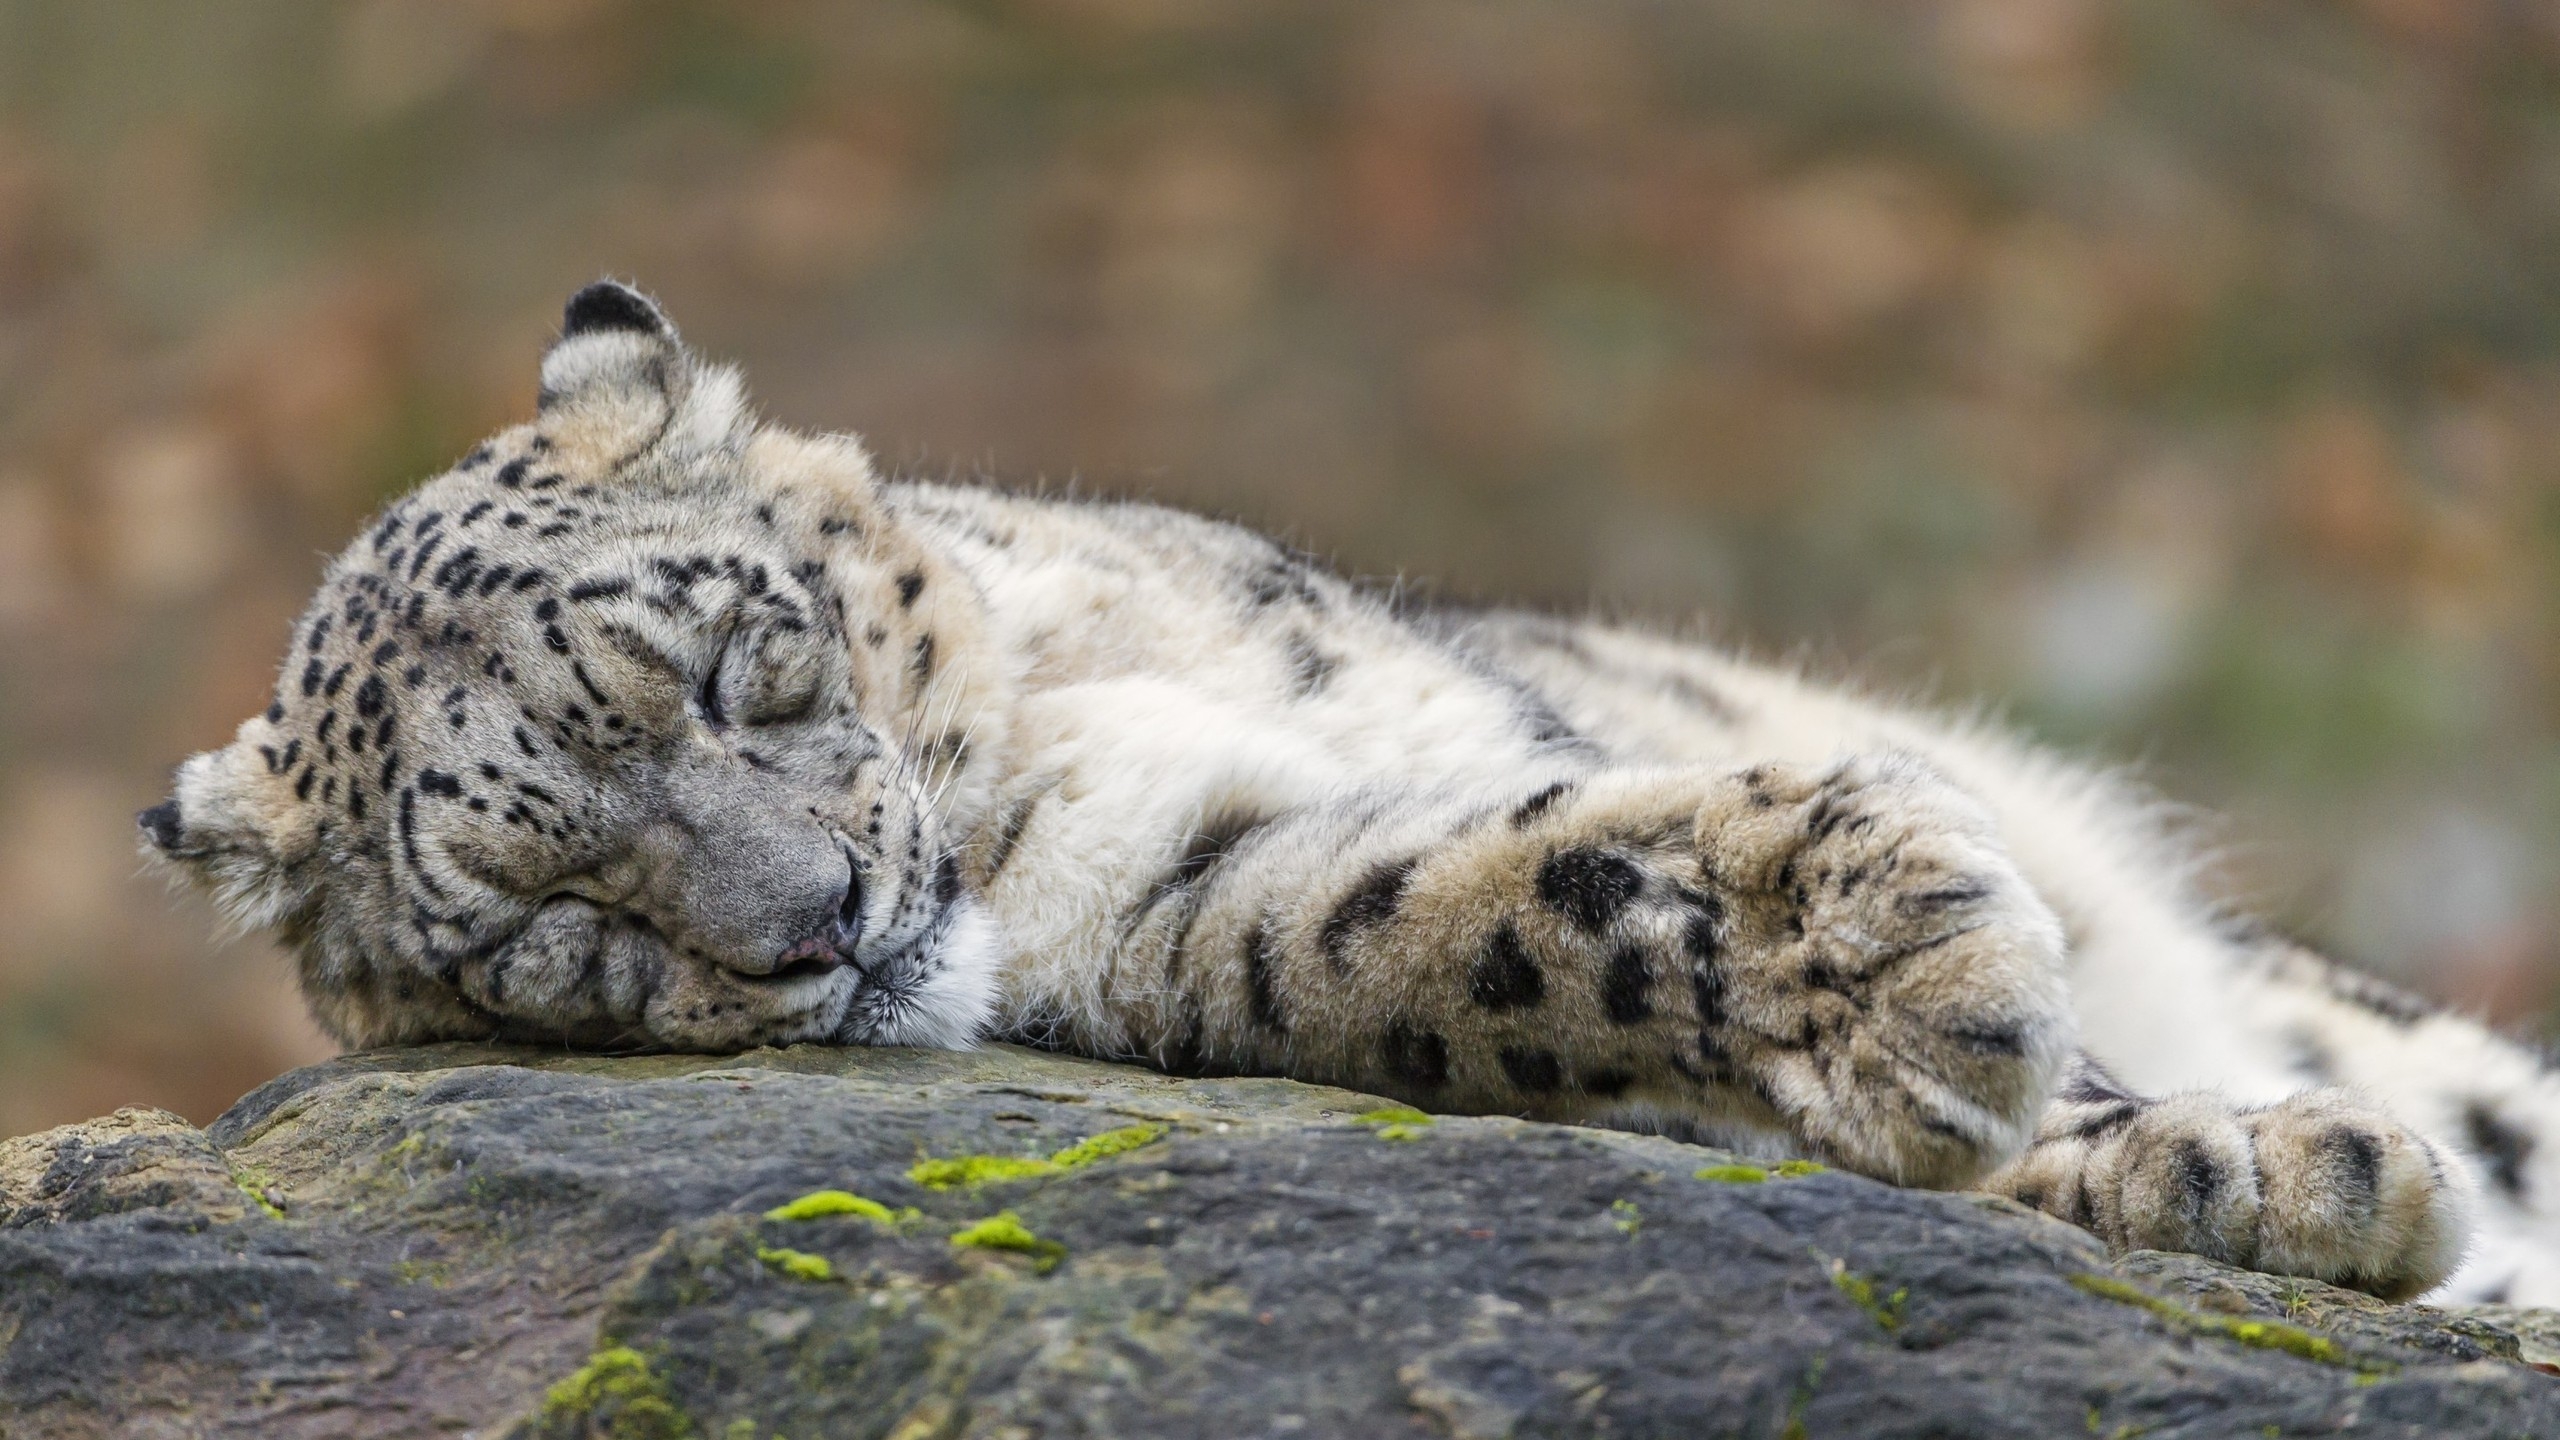 Sleeping Snow Leopard  for 2560x1440 HDTV resolution